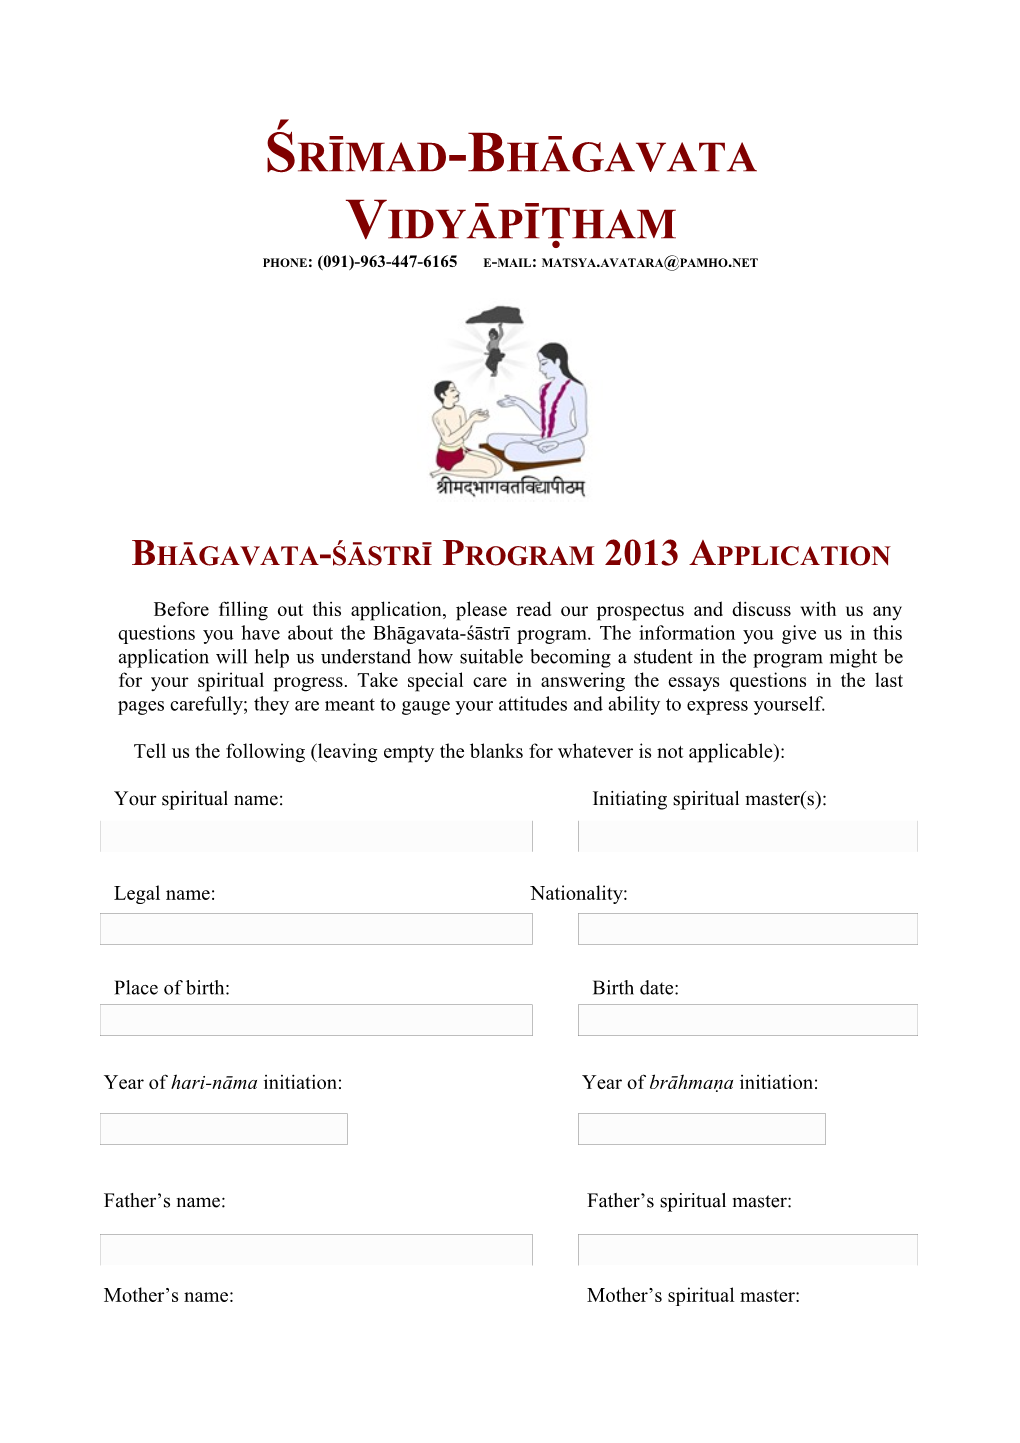 Bhāgavata-Śāstrī Program Application Form